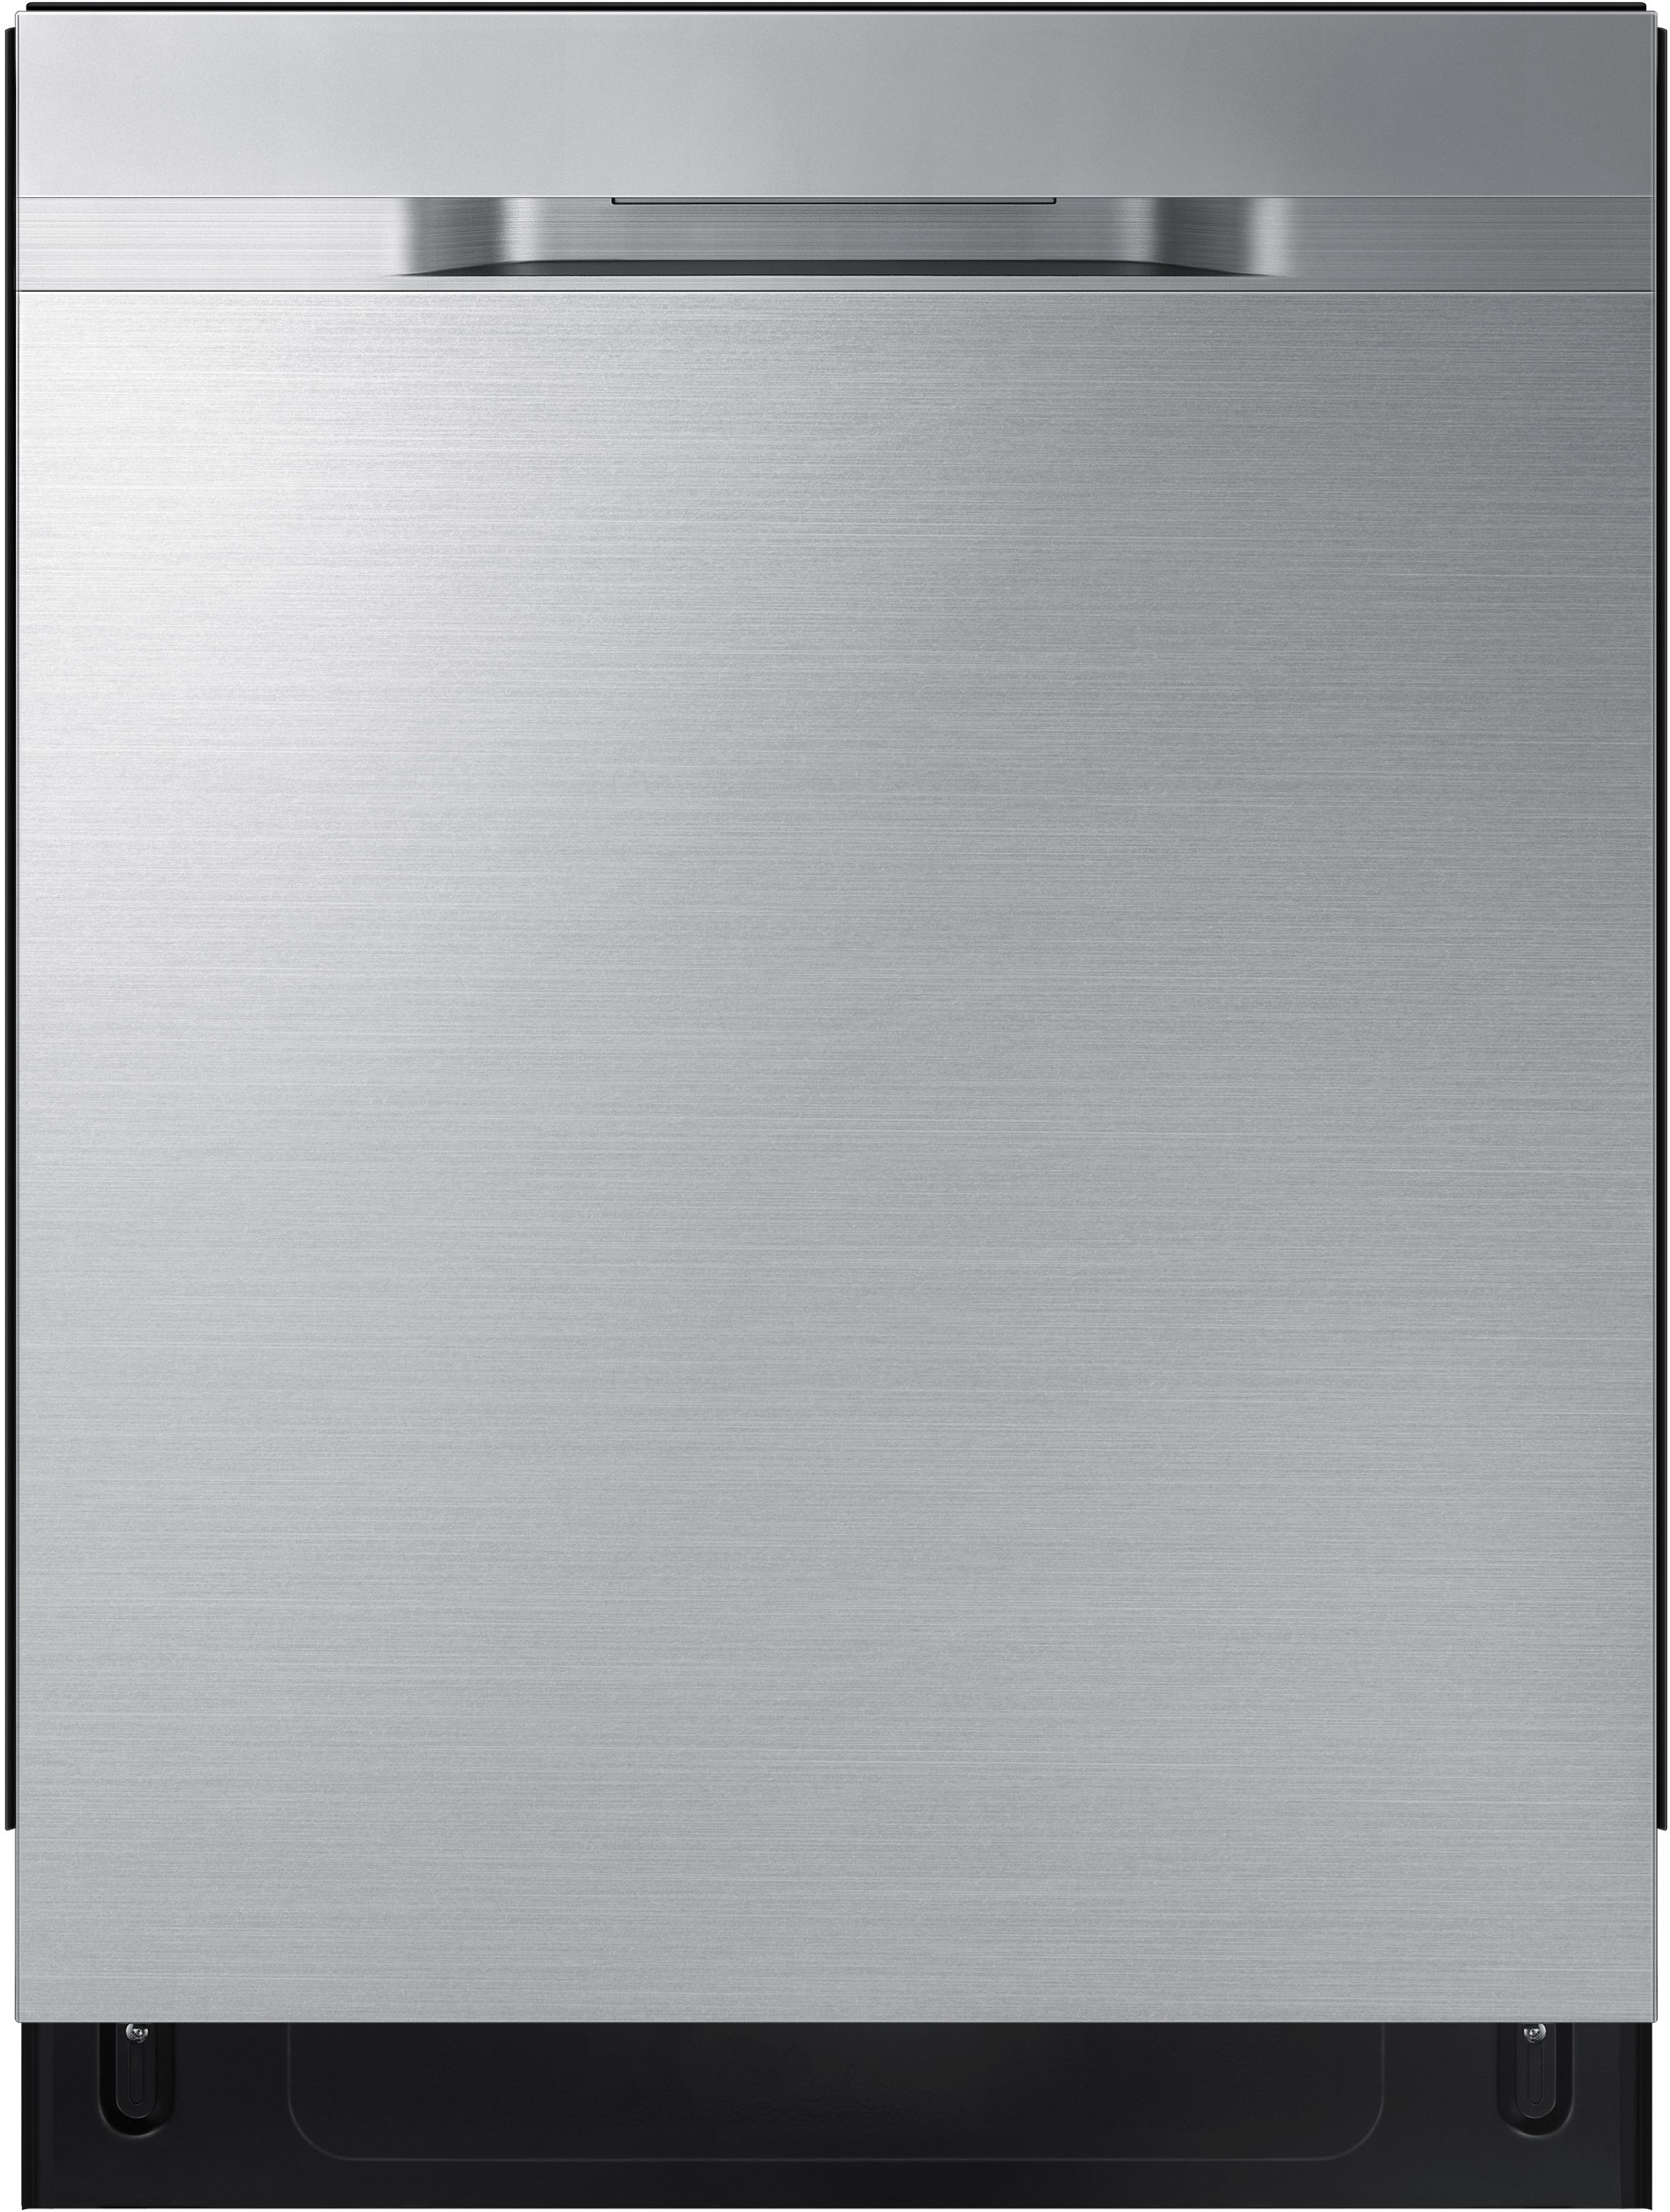 Samsung 24" Fingerprint Resistant Stainless Steel Built In Dishwasher-DW80R5060US